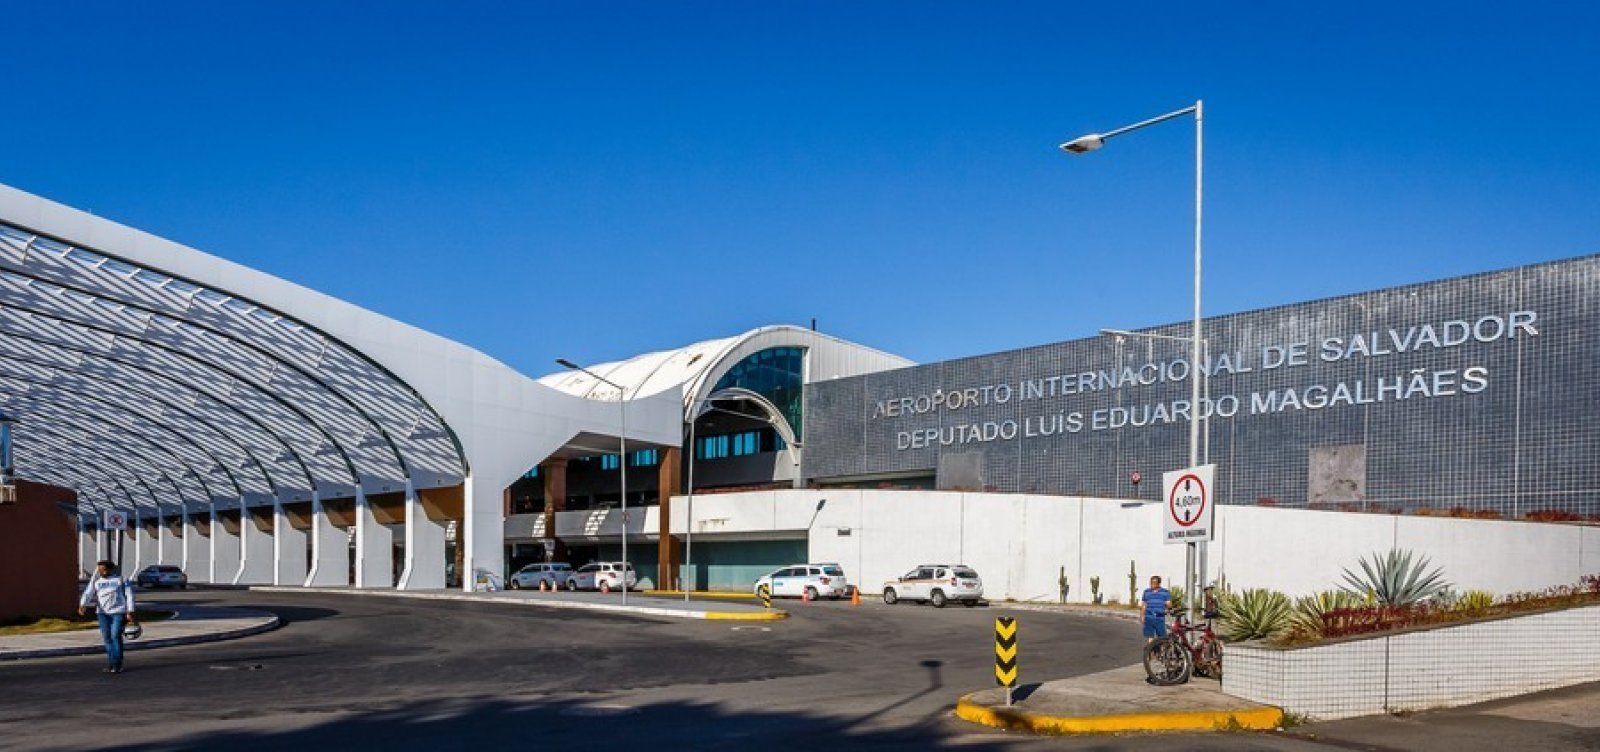 Aeroporto de Salvador registra menor média de atrasos na Copa América